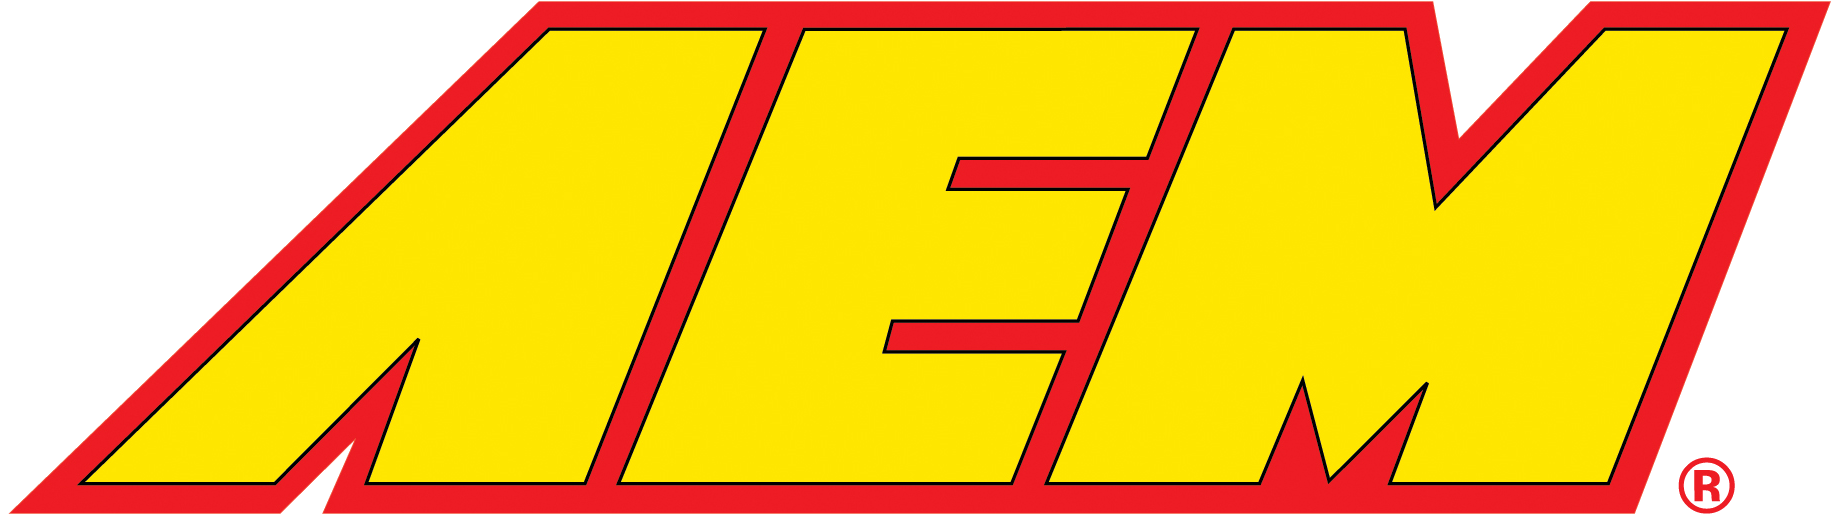 php logo, aem can digital dash racing displays motorsports #20771